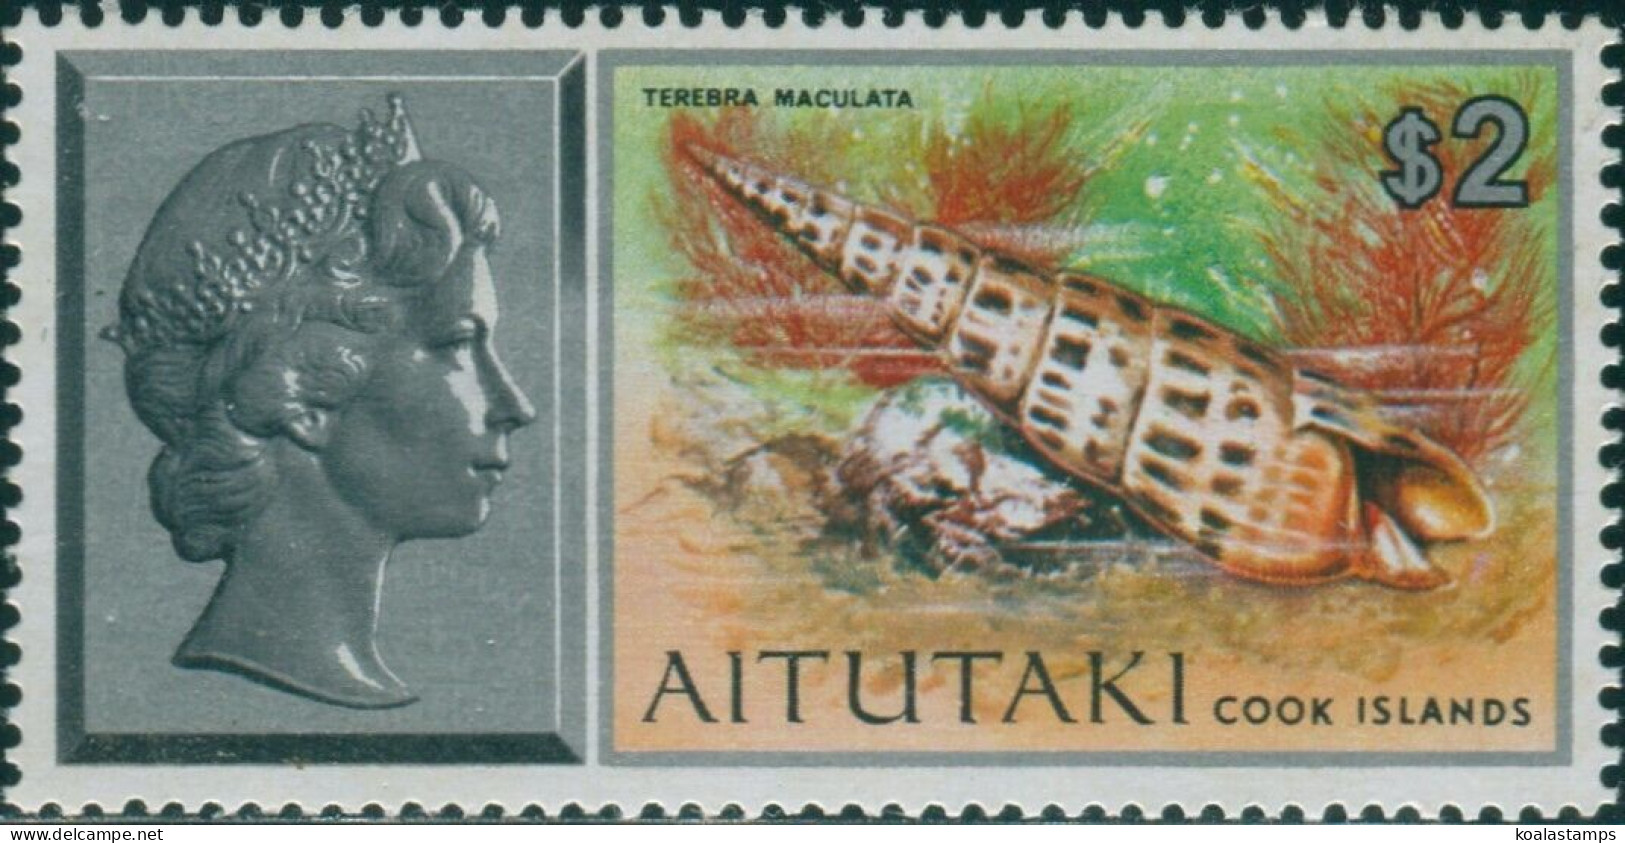 Aitutaki 1974 SG109 $2 Shell MNH - Cook Islands